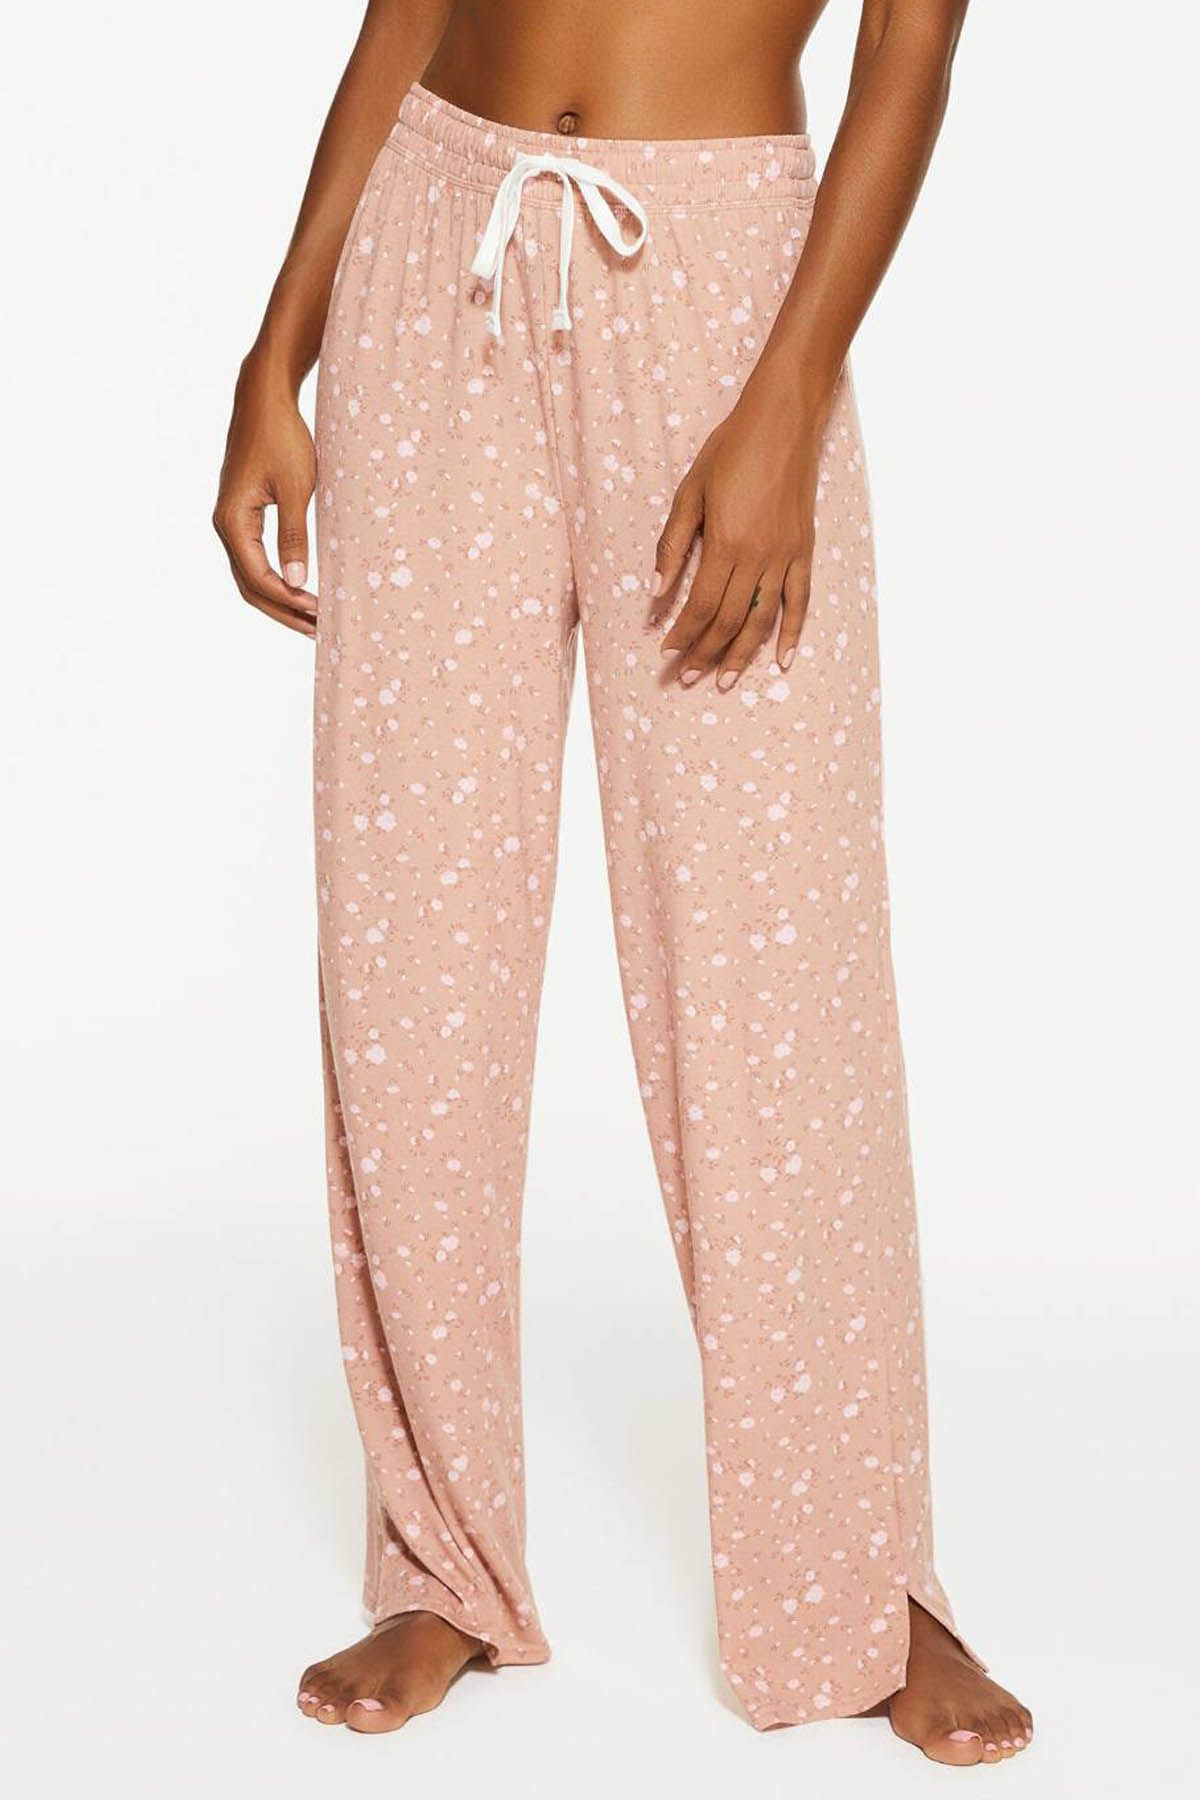 Aeropostale Women's Pajama Joggers $17 | Free Stuff Finder